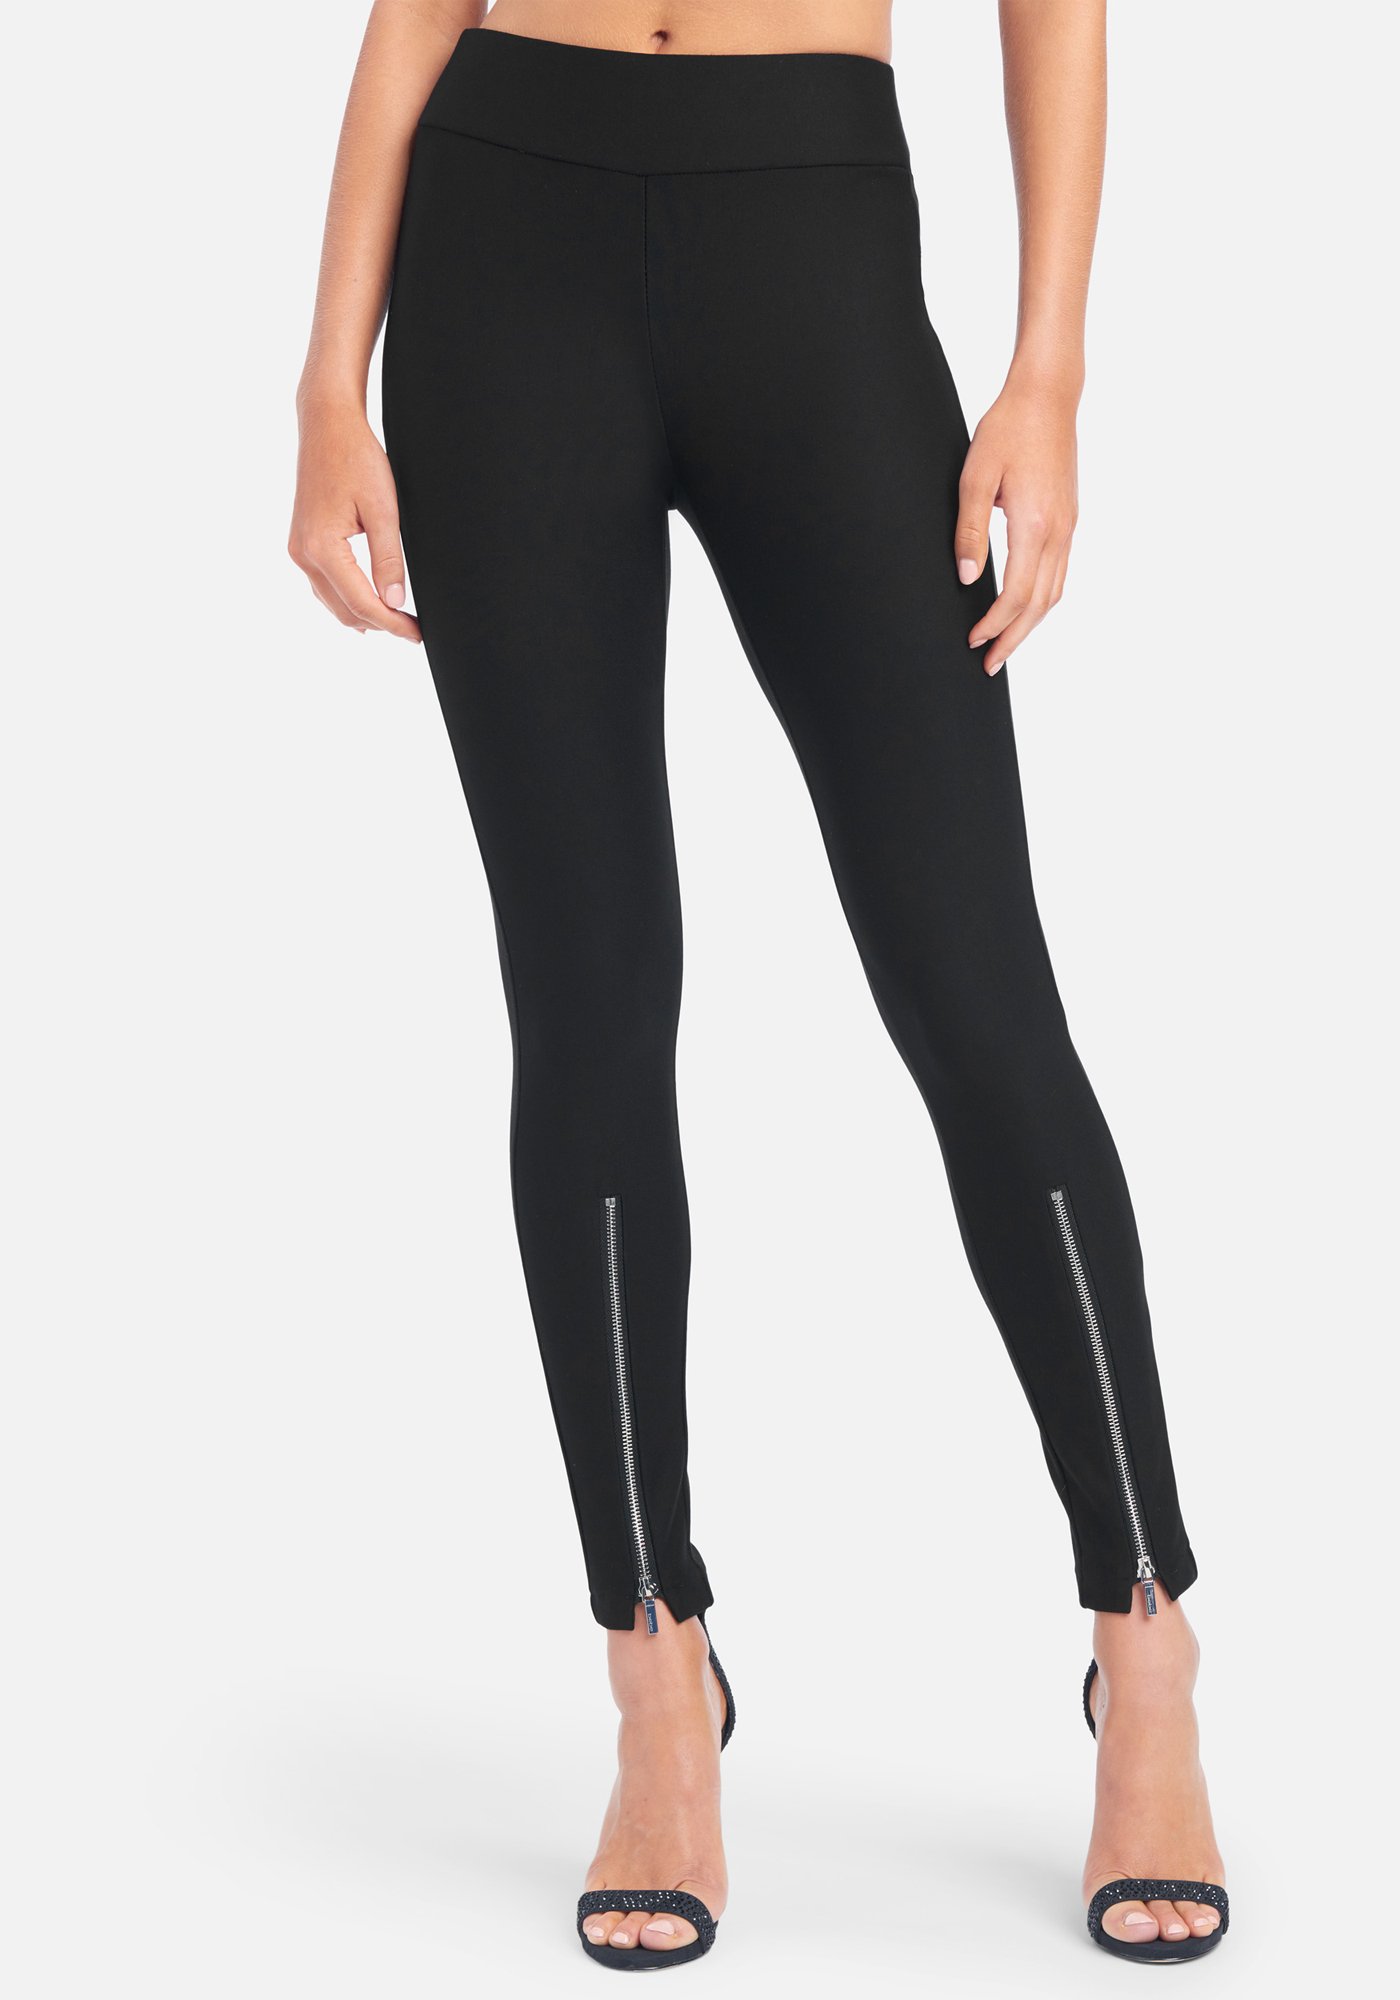 Bebe Women's High Rise Zipper Front Legging, Size Small in Black Spandex/Nylon